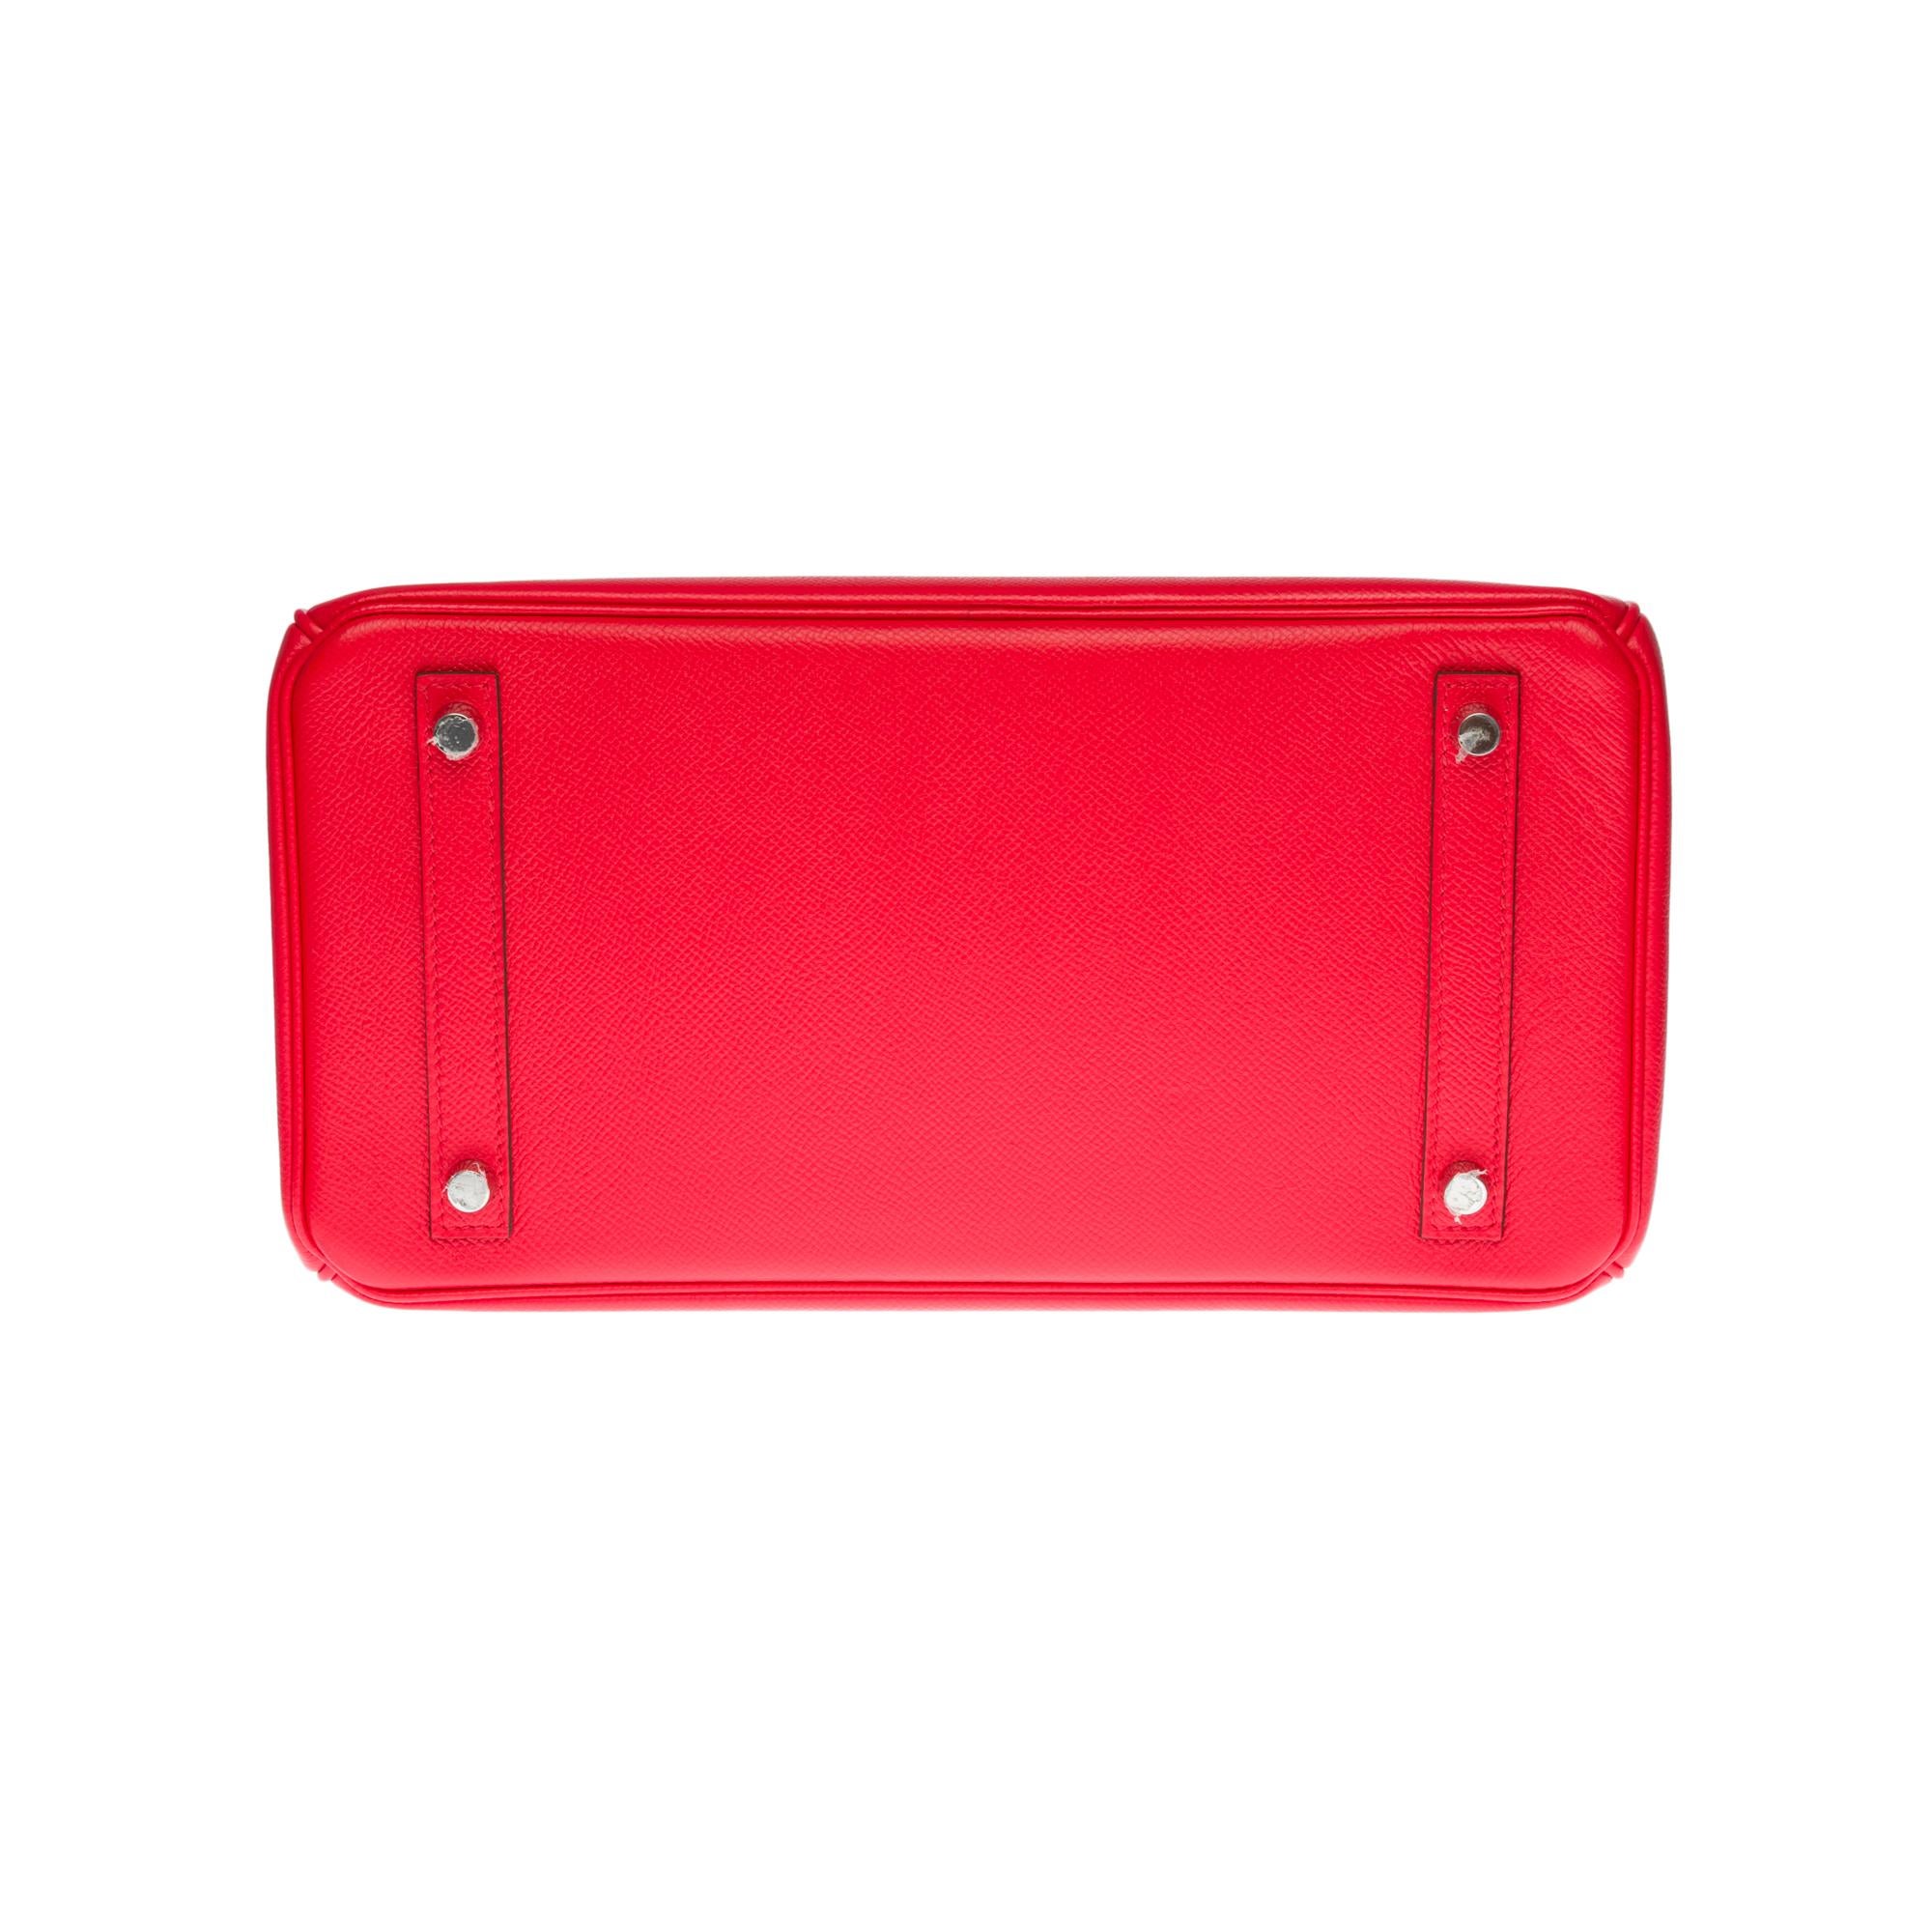 Stunning Hermès Birkin 30 handbag in Rouge de Coeur Epsom leather, SHW 3